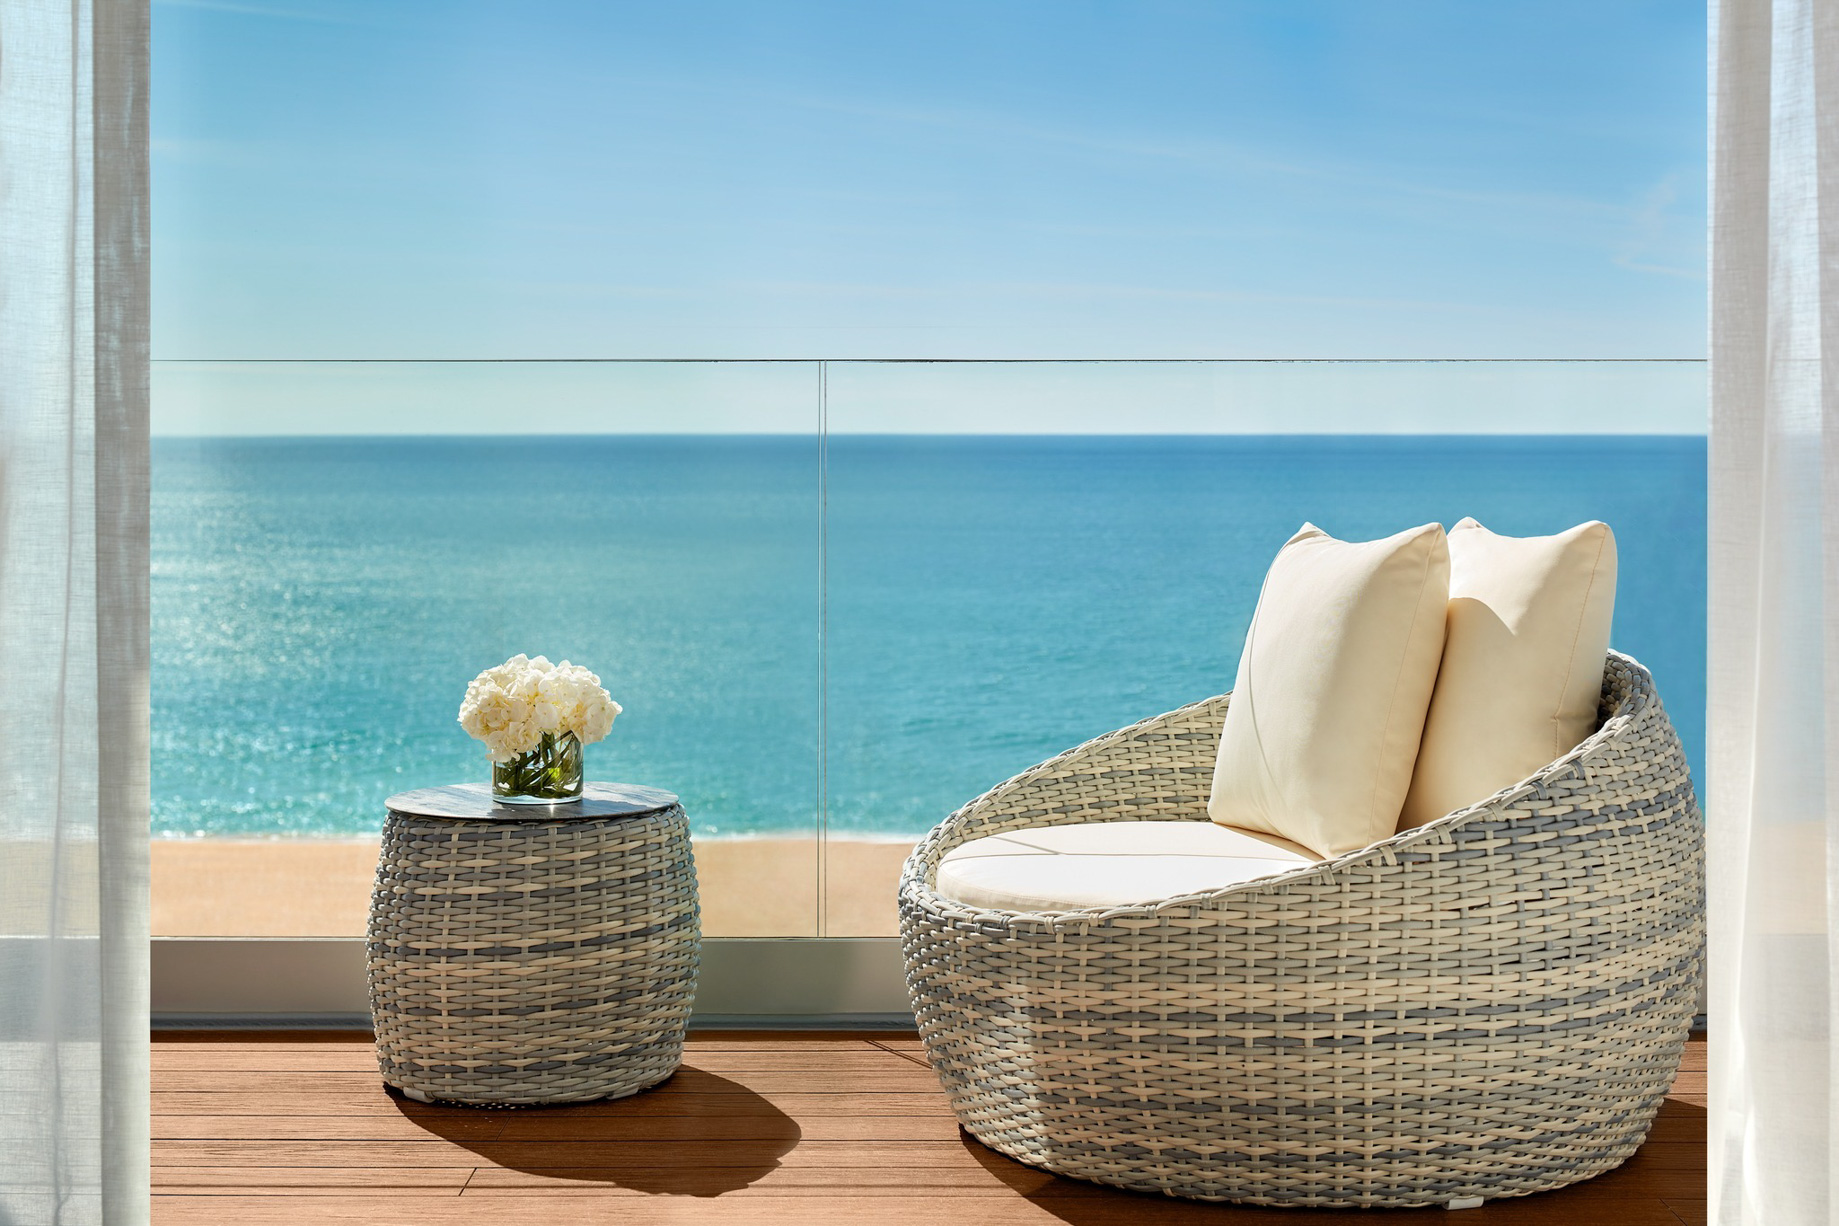 Tivoli Marina Vilamoura Algarve Resort – Portugal – Vilamoura Suite Sea View